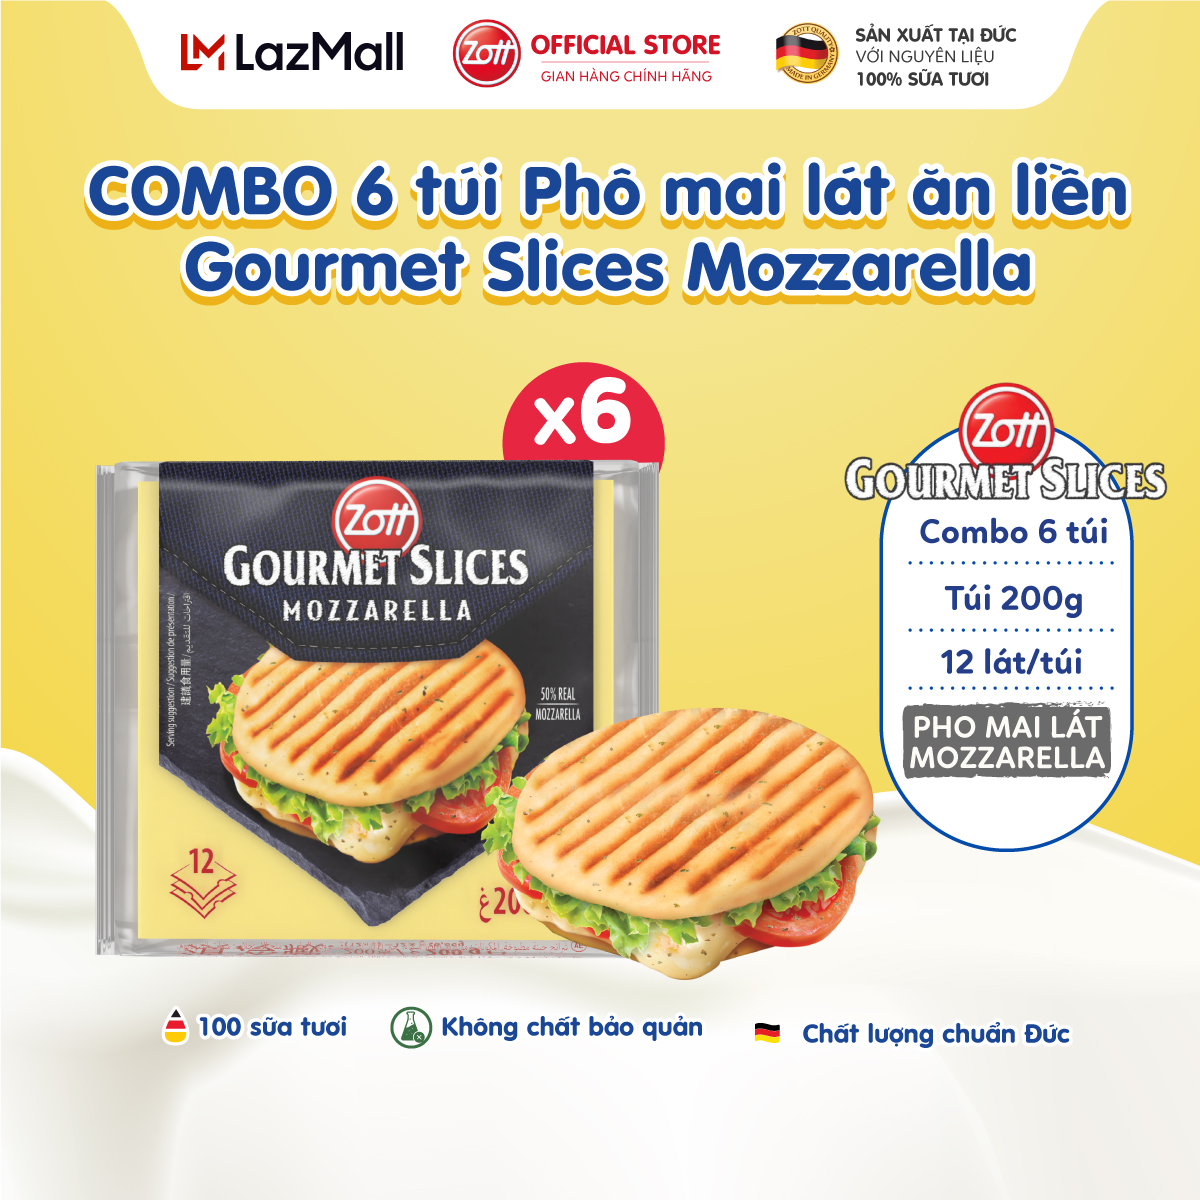 COMBO 6 túi Phô mai lát Zott Gourmet Slices MOZZARELLA nhập khẩu từ Đức